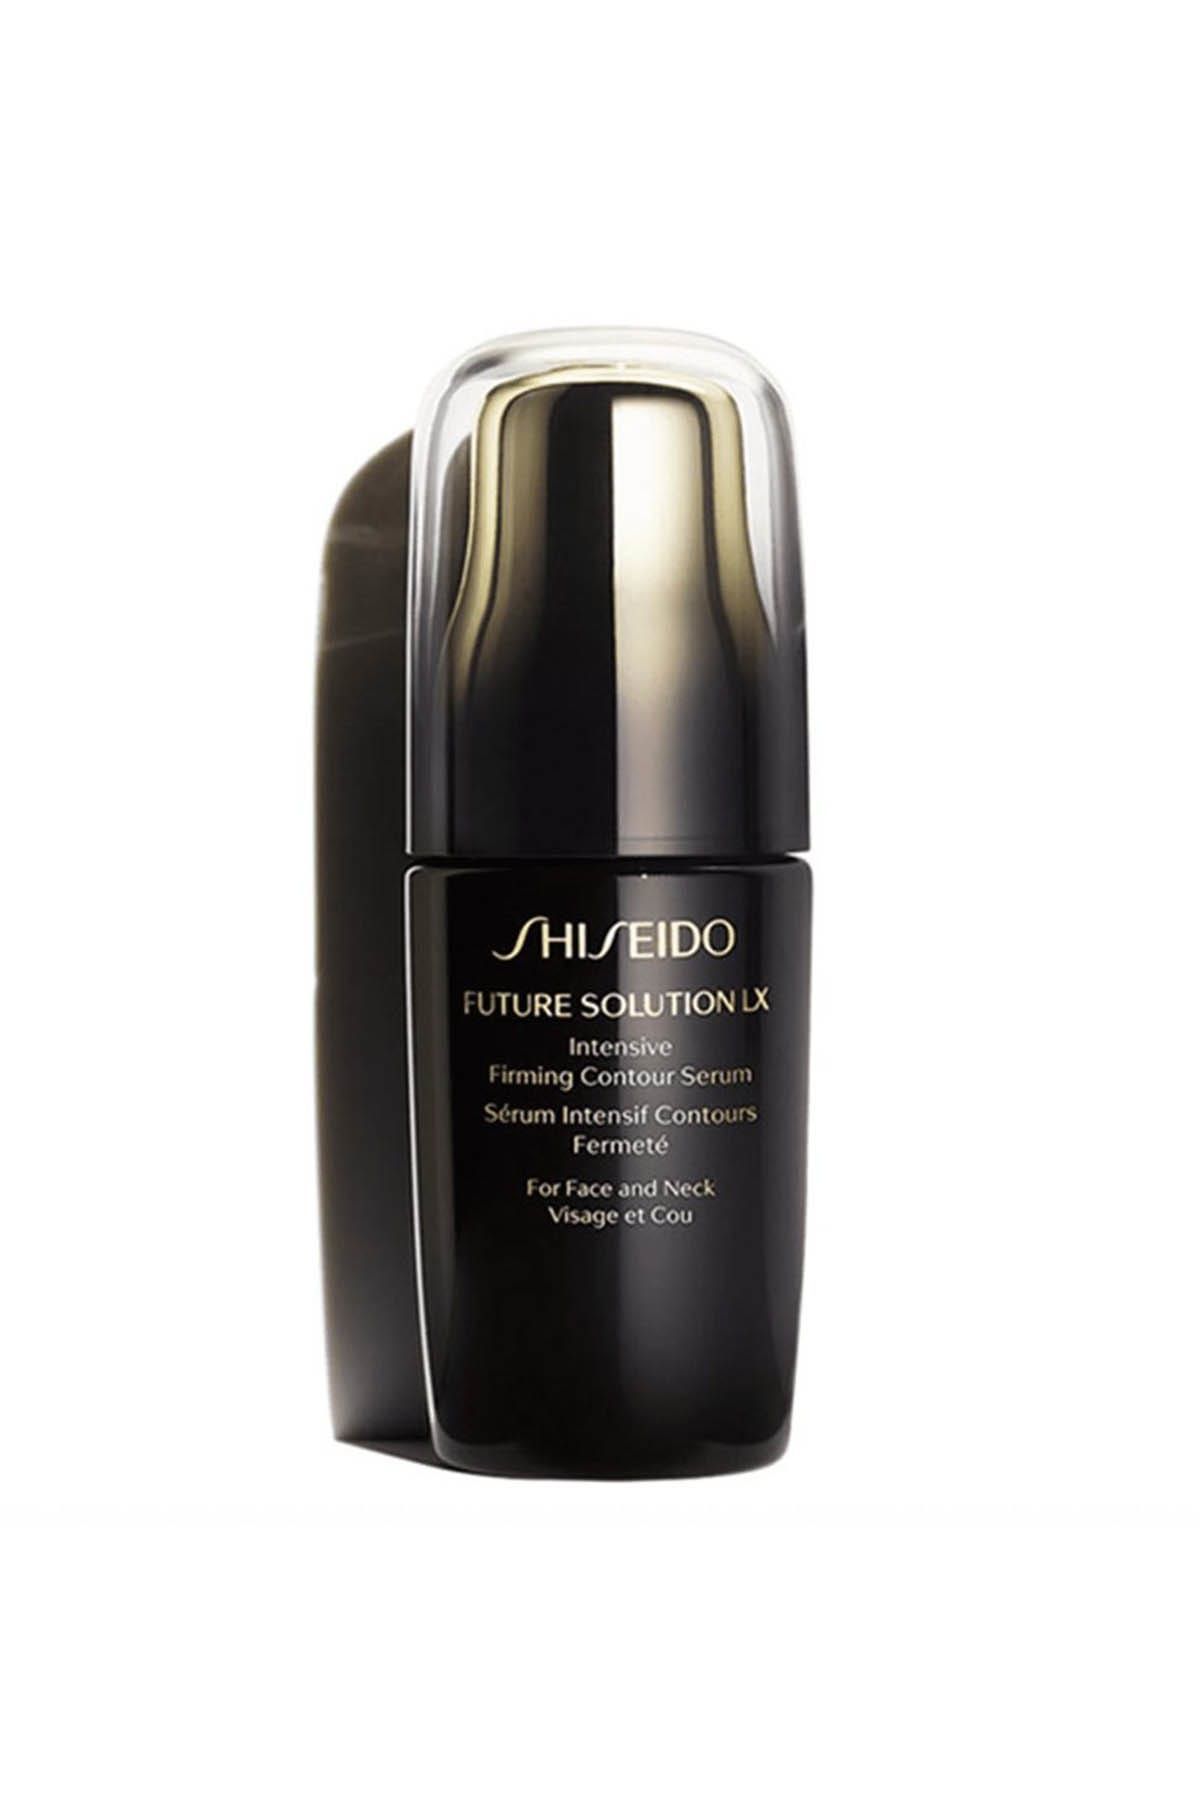 Shiseido Cilt Sıkılaştırıcı Serum - Future Solution LX Intensive Firming Contour Serum 50 ml 729238139237